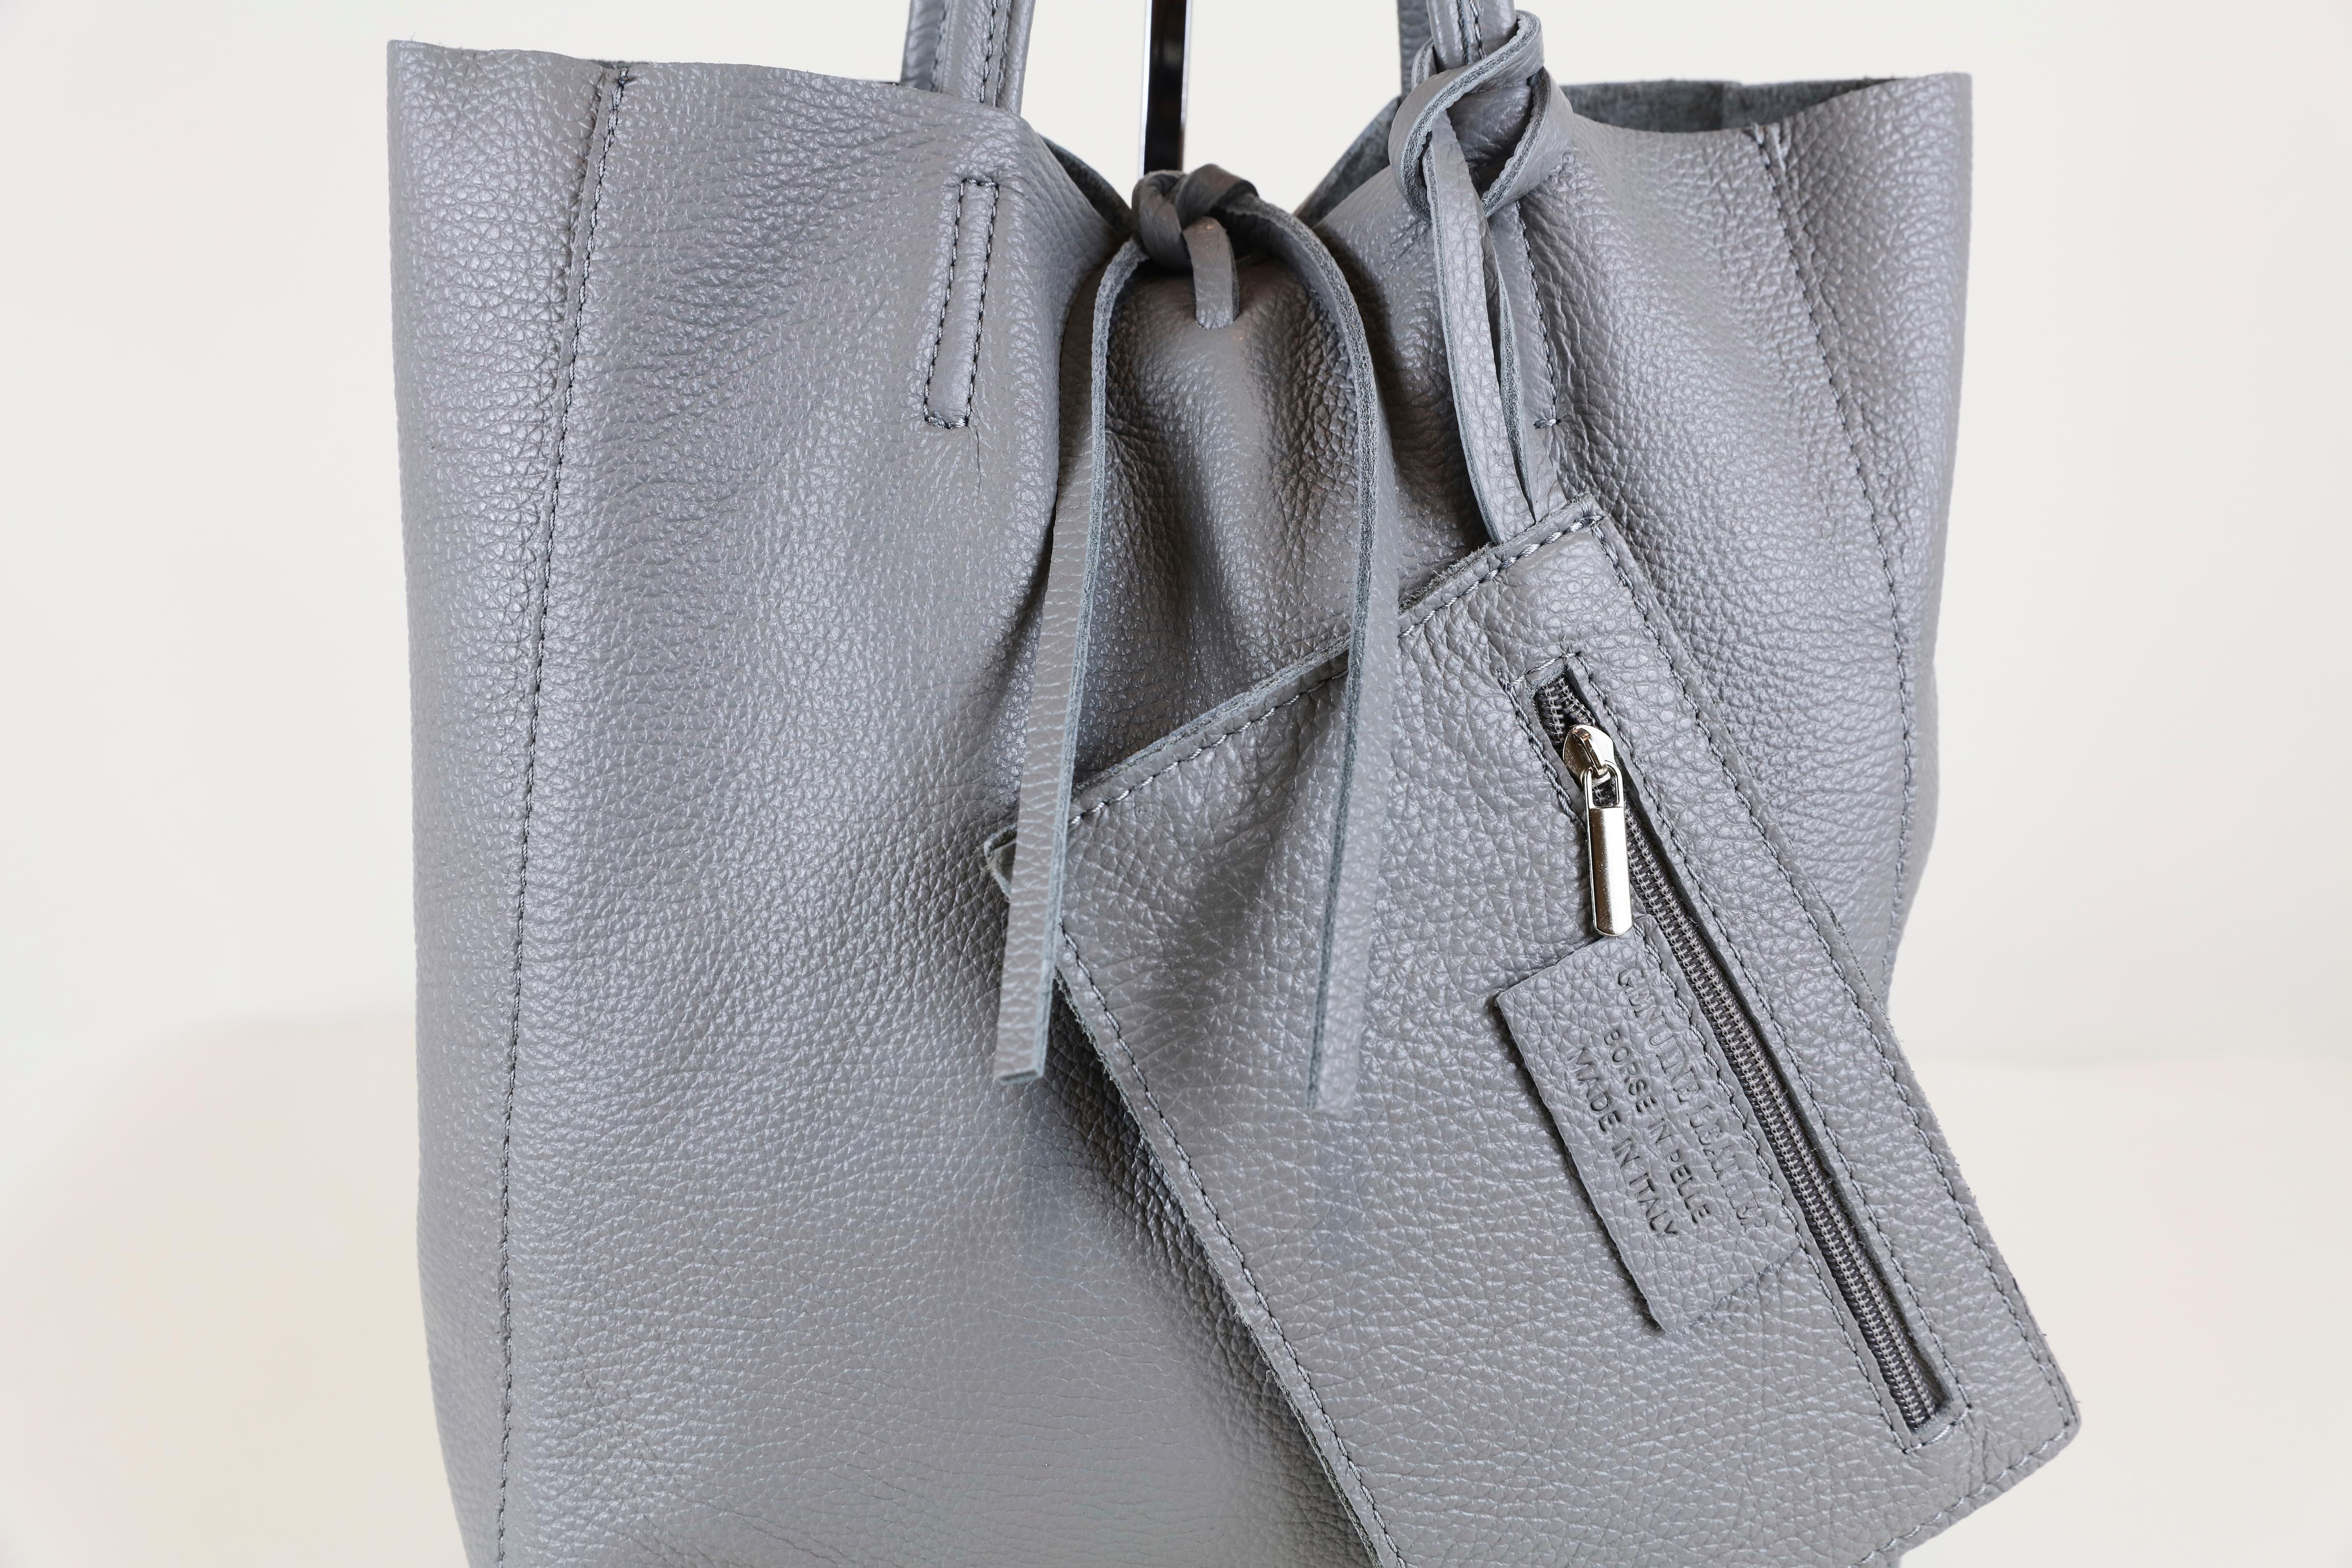 italian leather handbags for sale miami fl